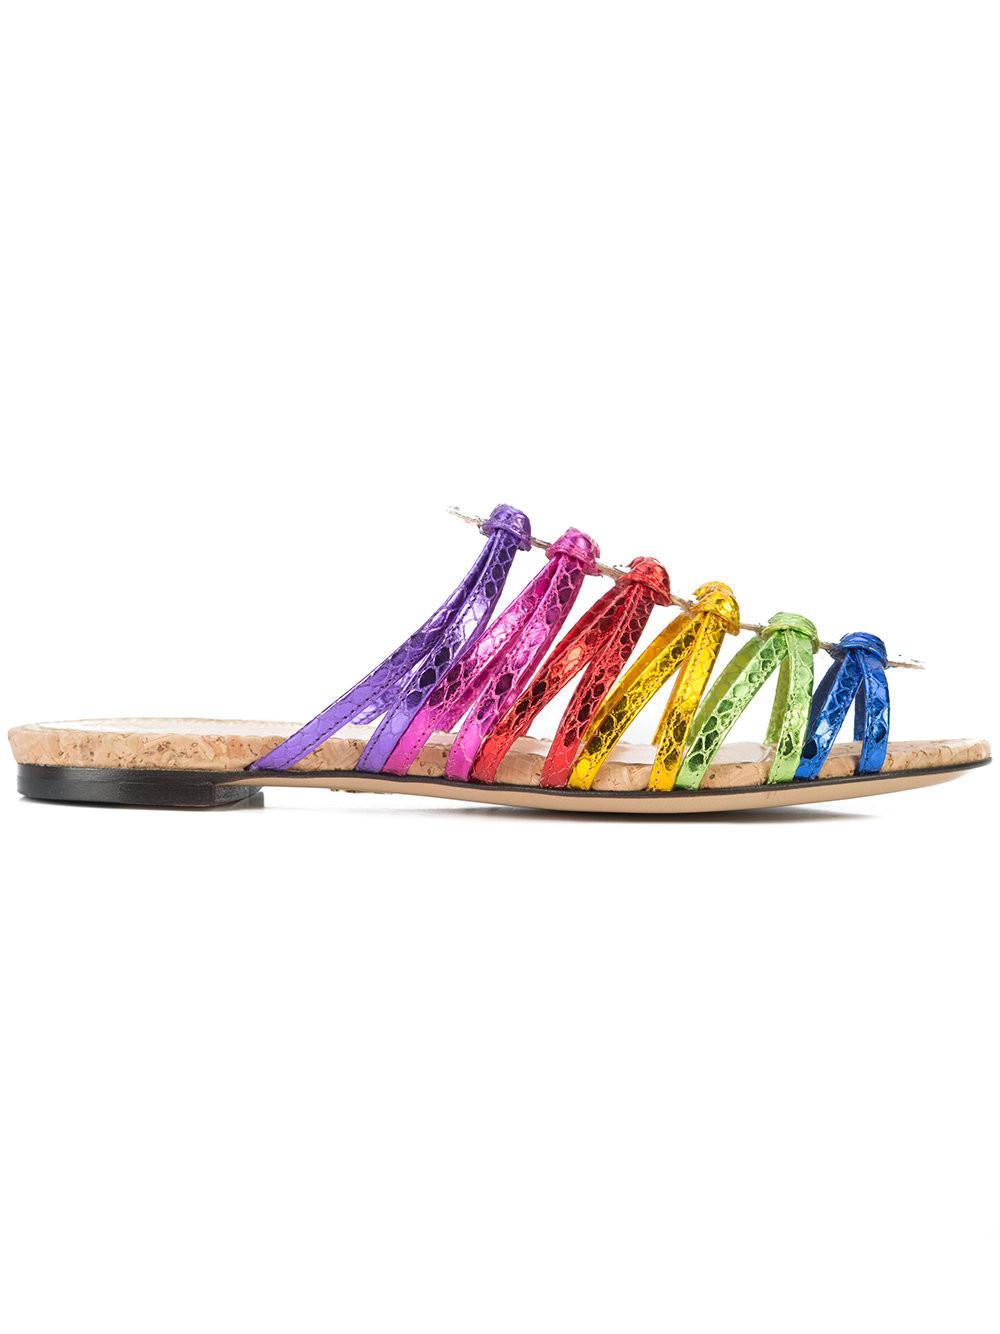 rainbow metallic sandals